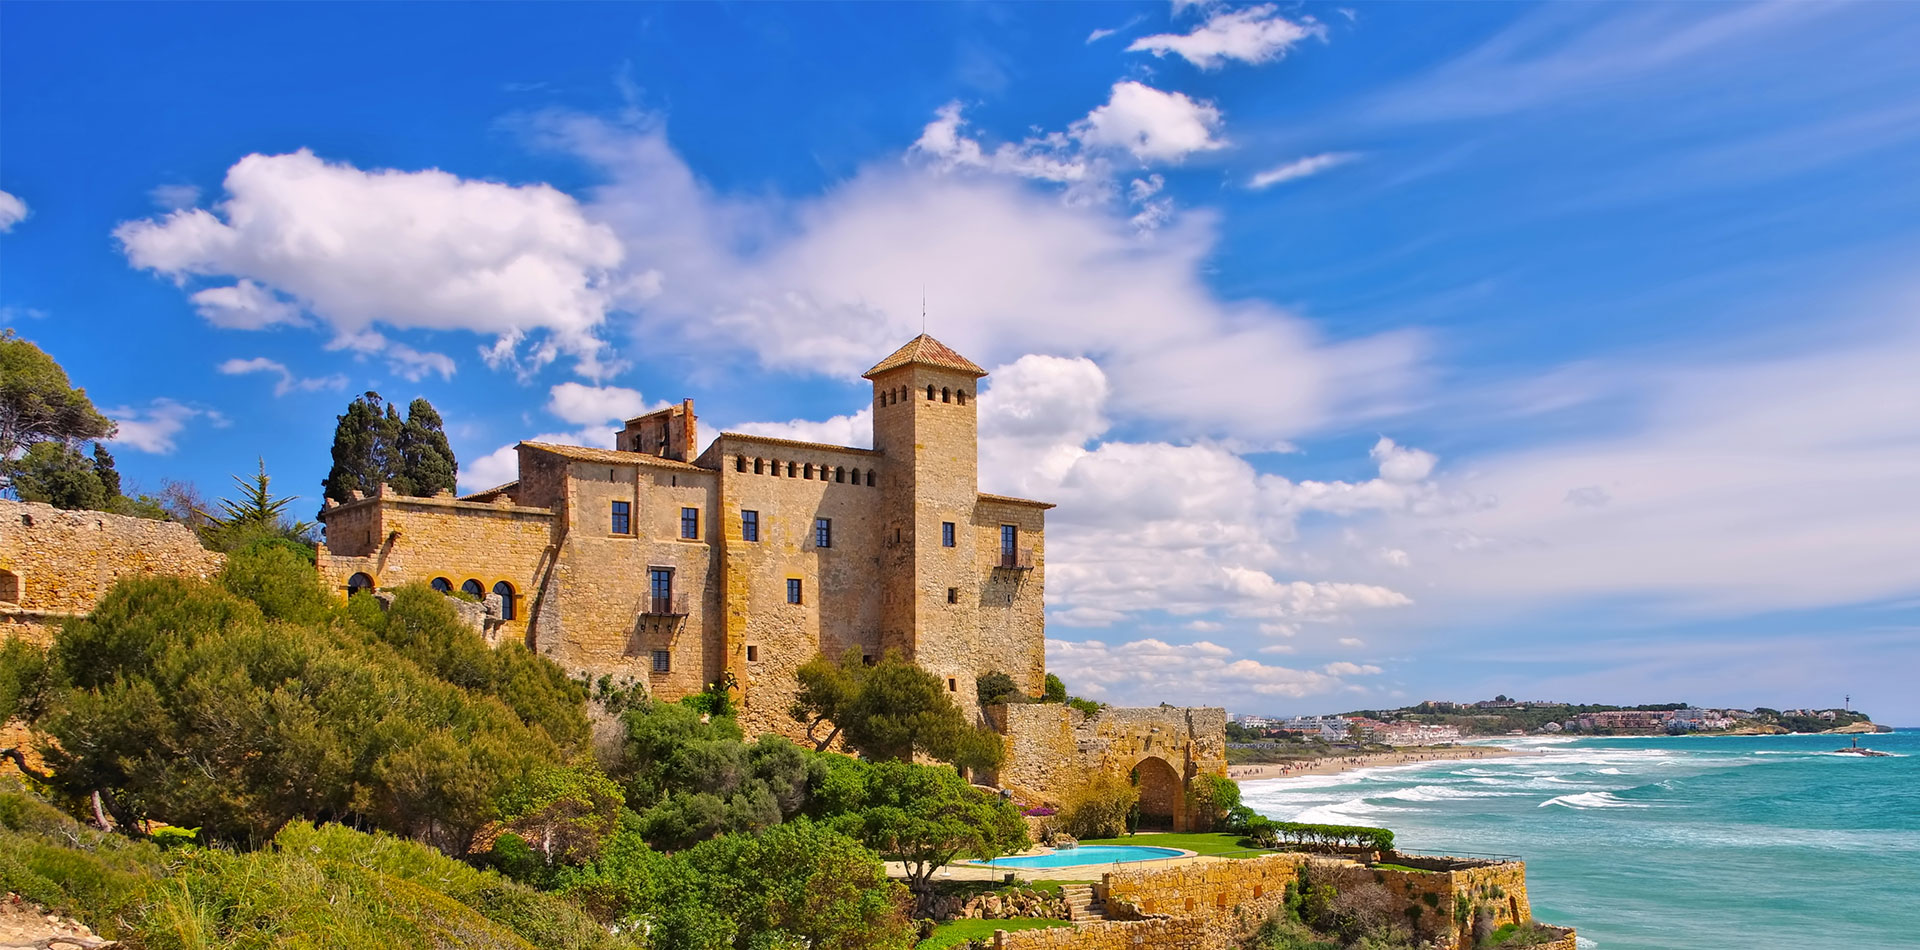 Castell de Tamarit near Tarragona